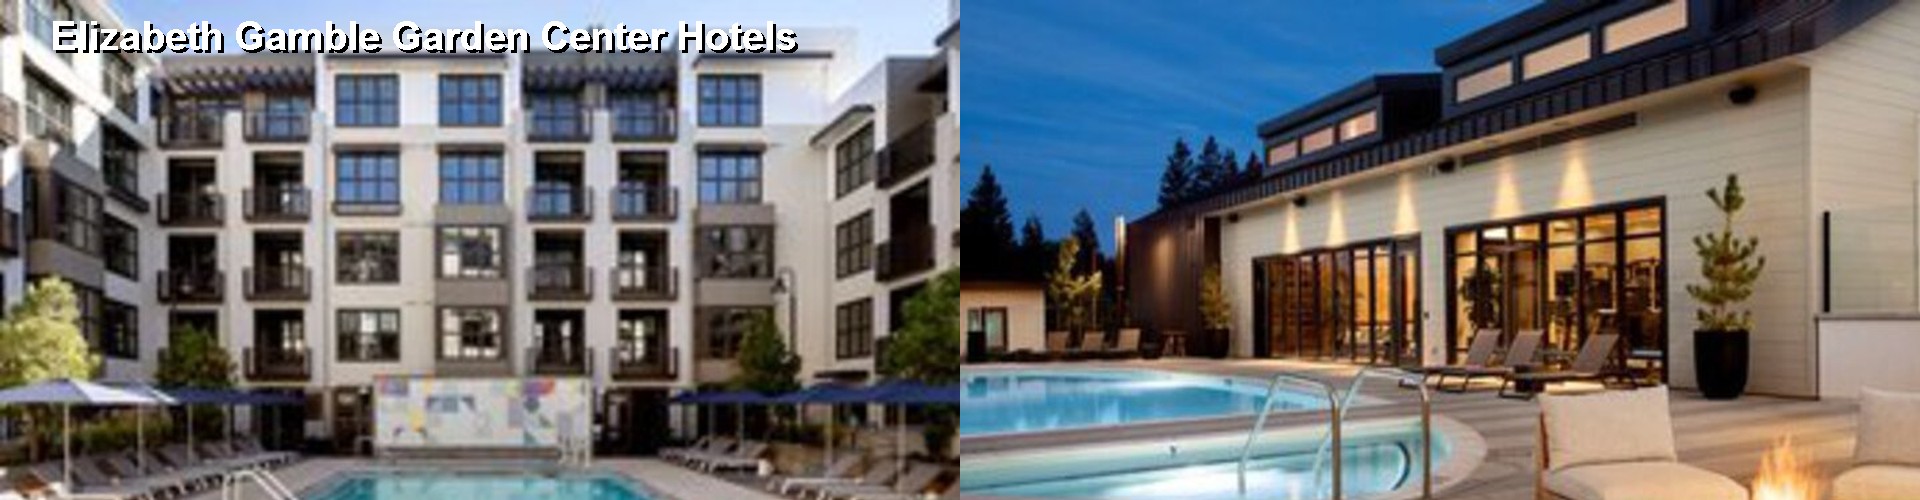 5 Best Hotels near Elizabeth Gamble Garden Center